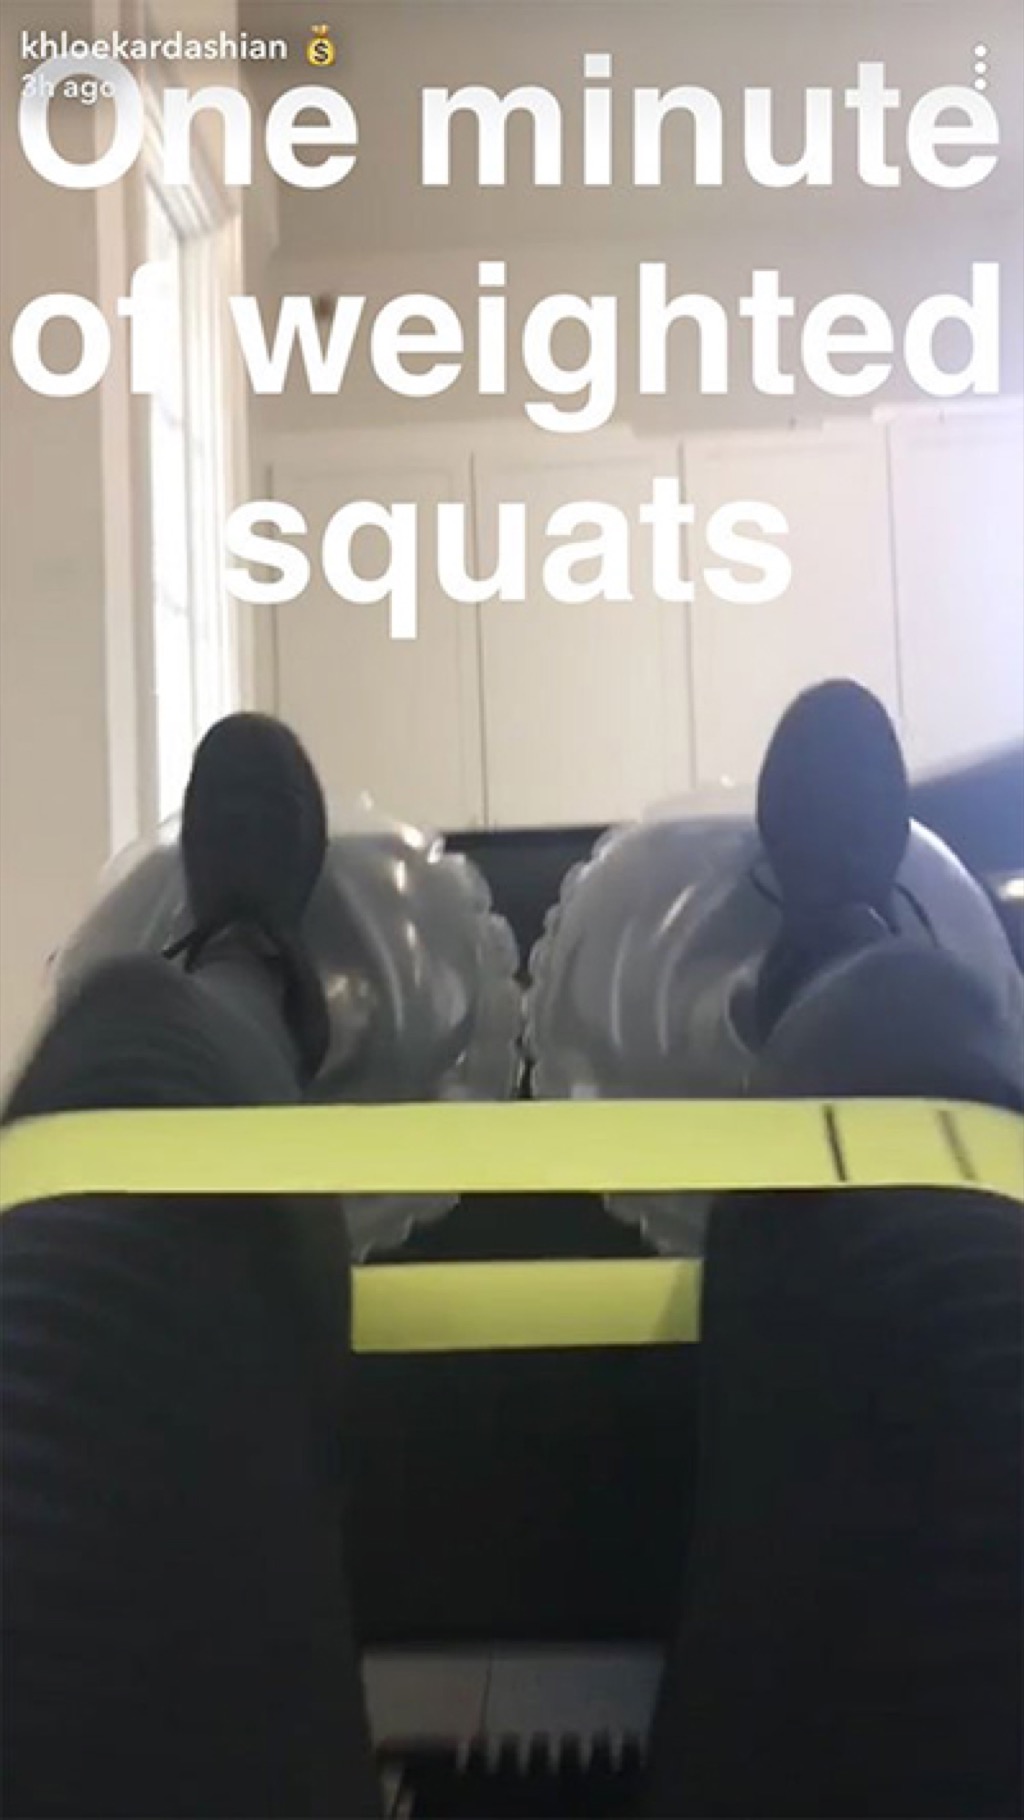 khloe kardashian does weighted squats